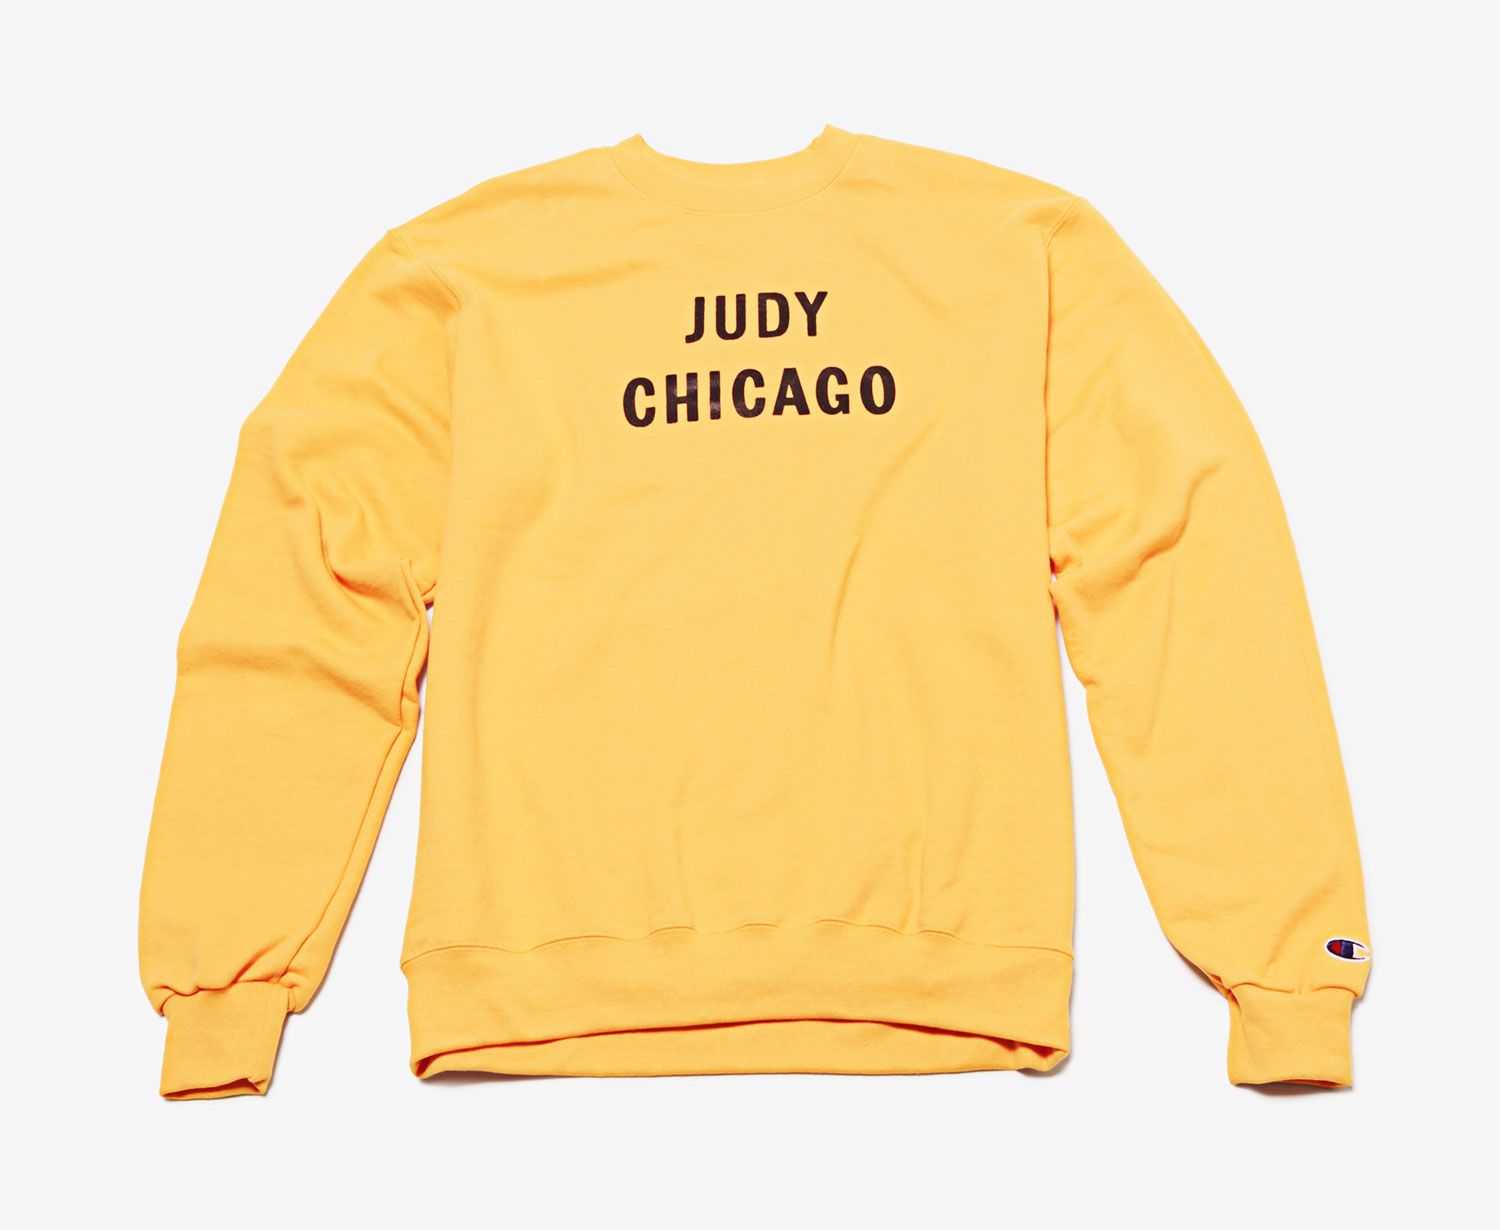 Prospect’s Judy Chicago sweatshirt.